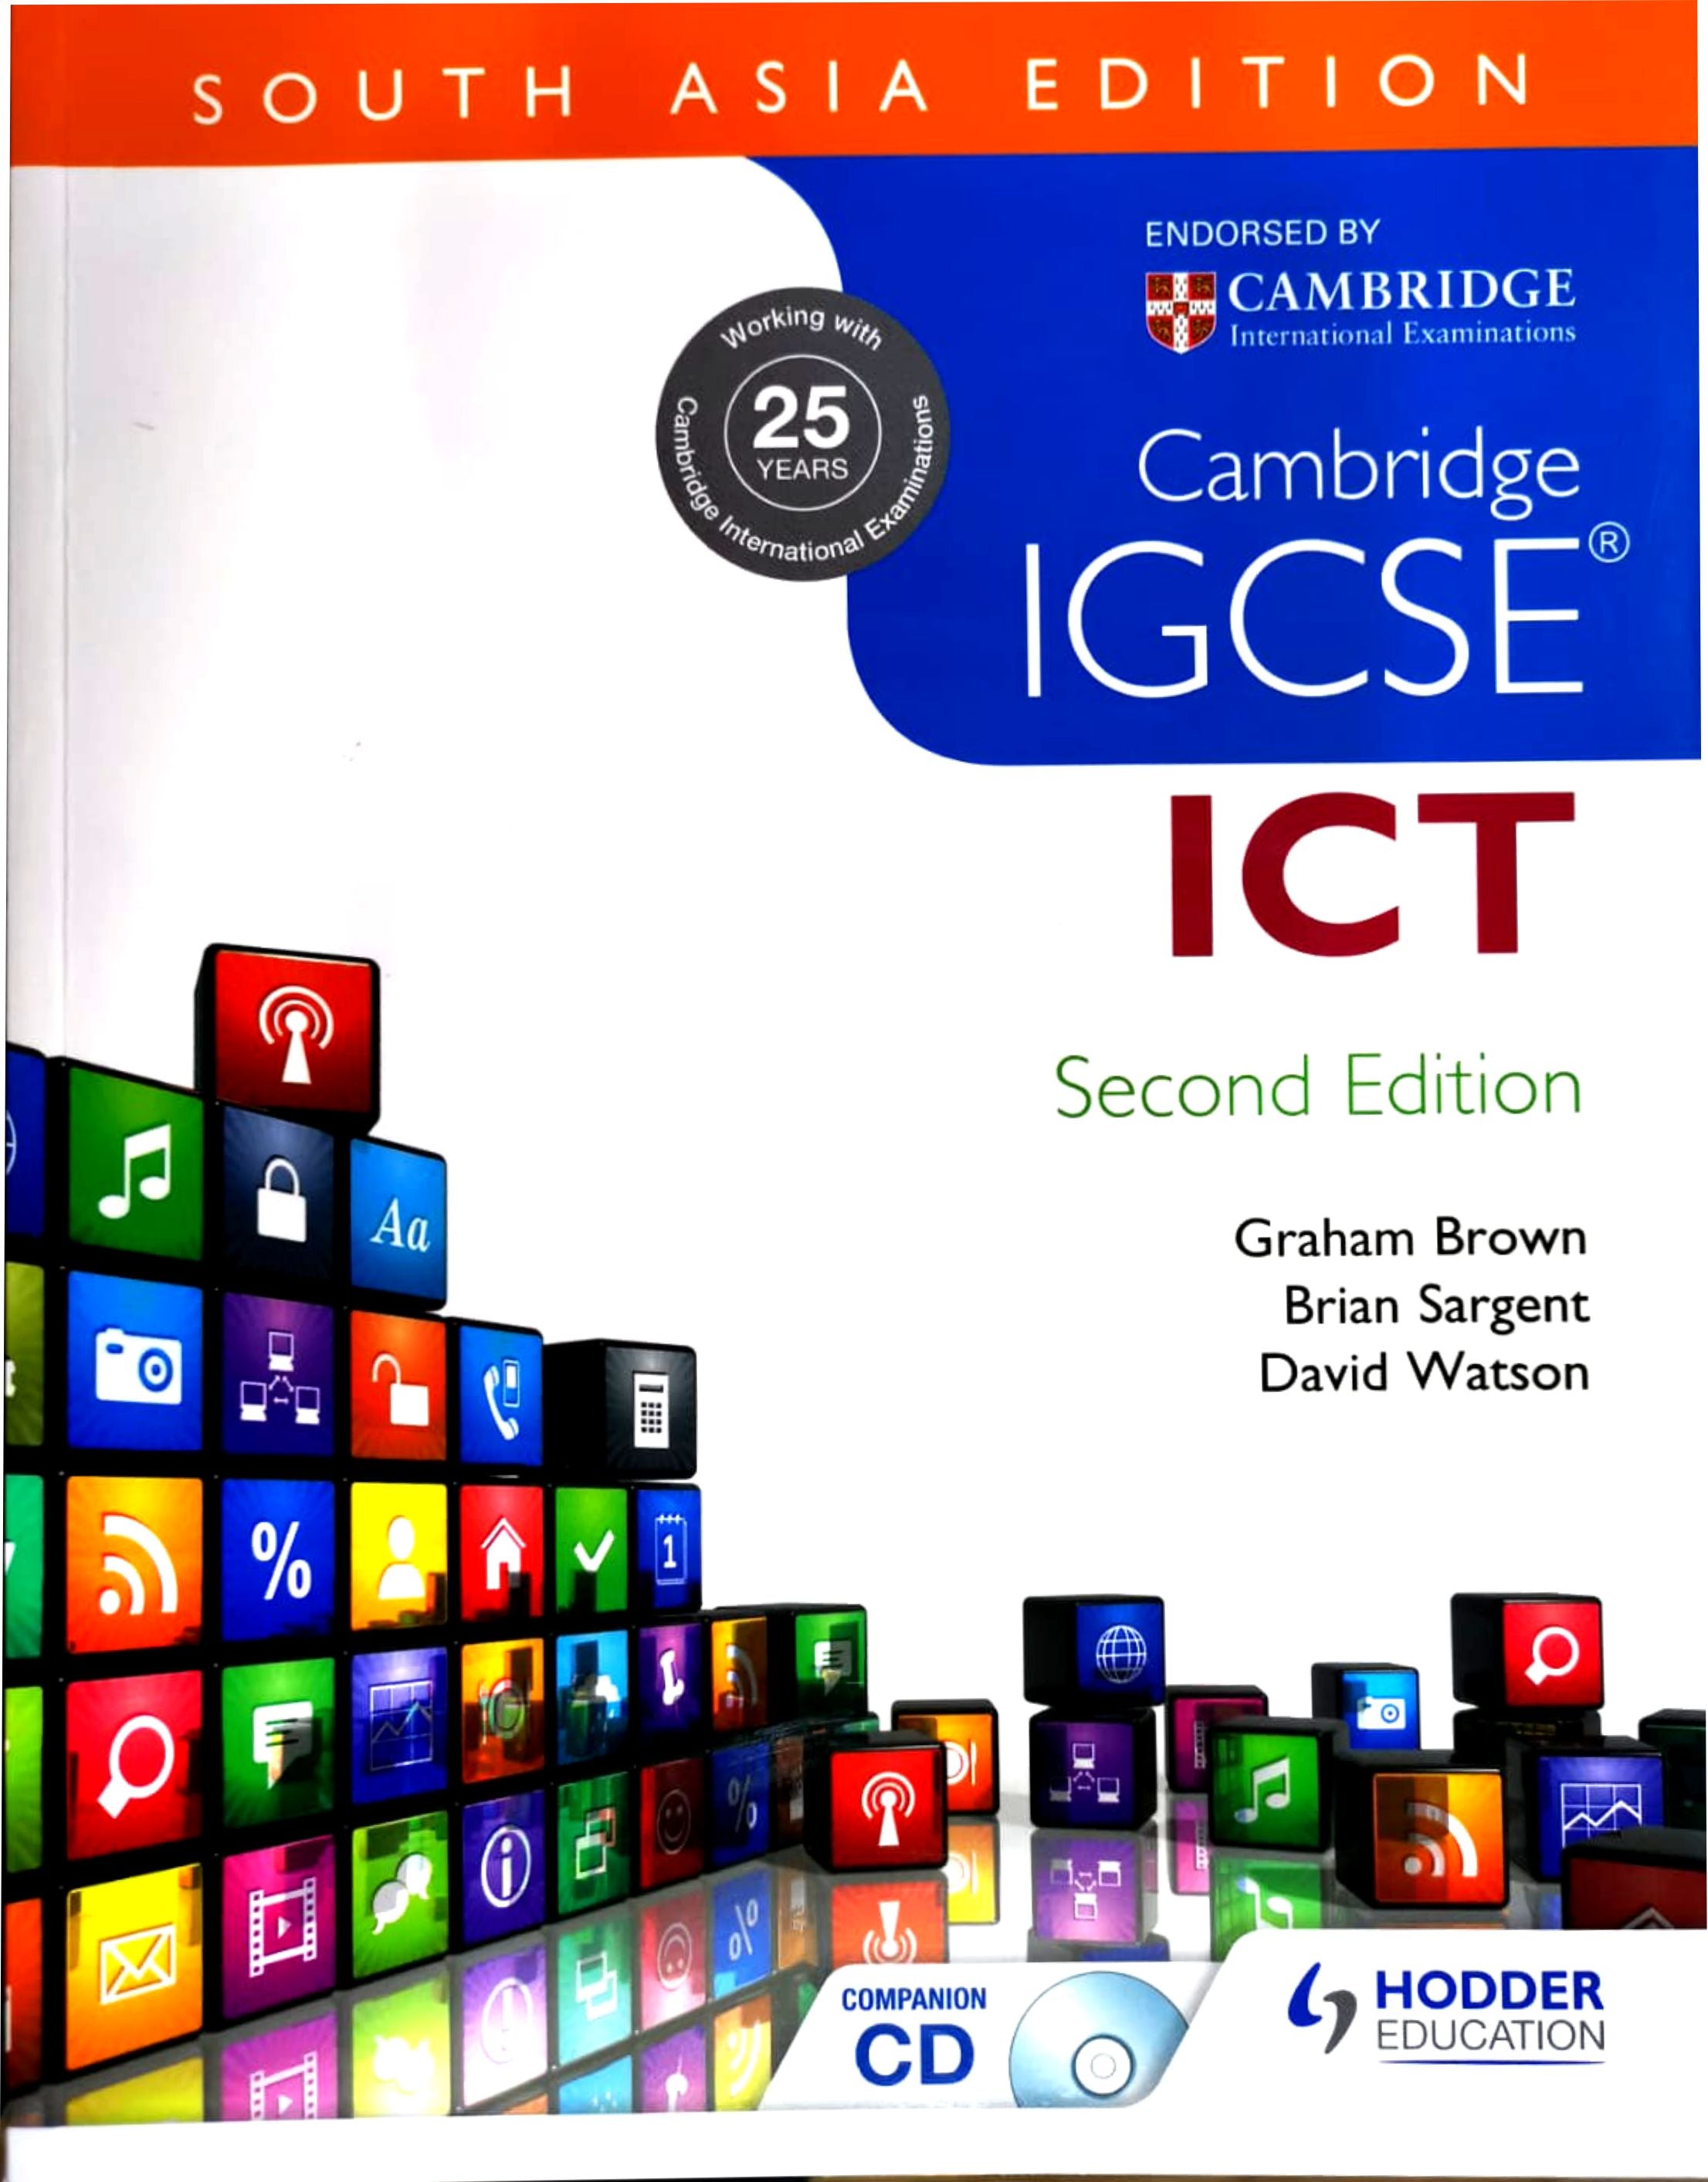 Cambridge IGCSE ICT 2nd Edition (SOUTH ASIA EDITION)